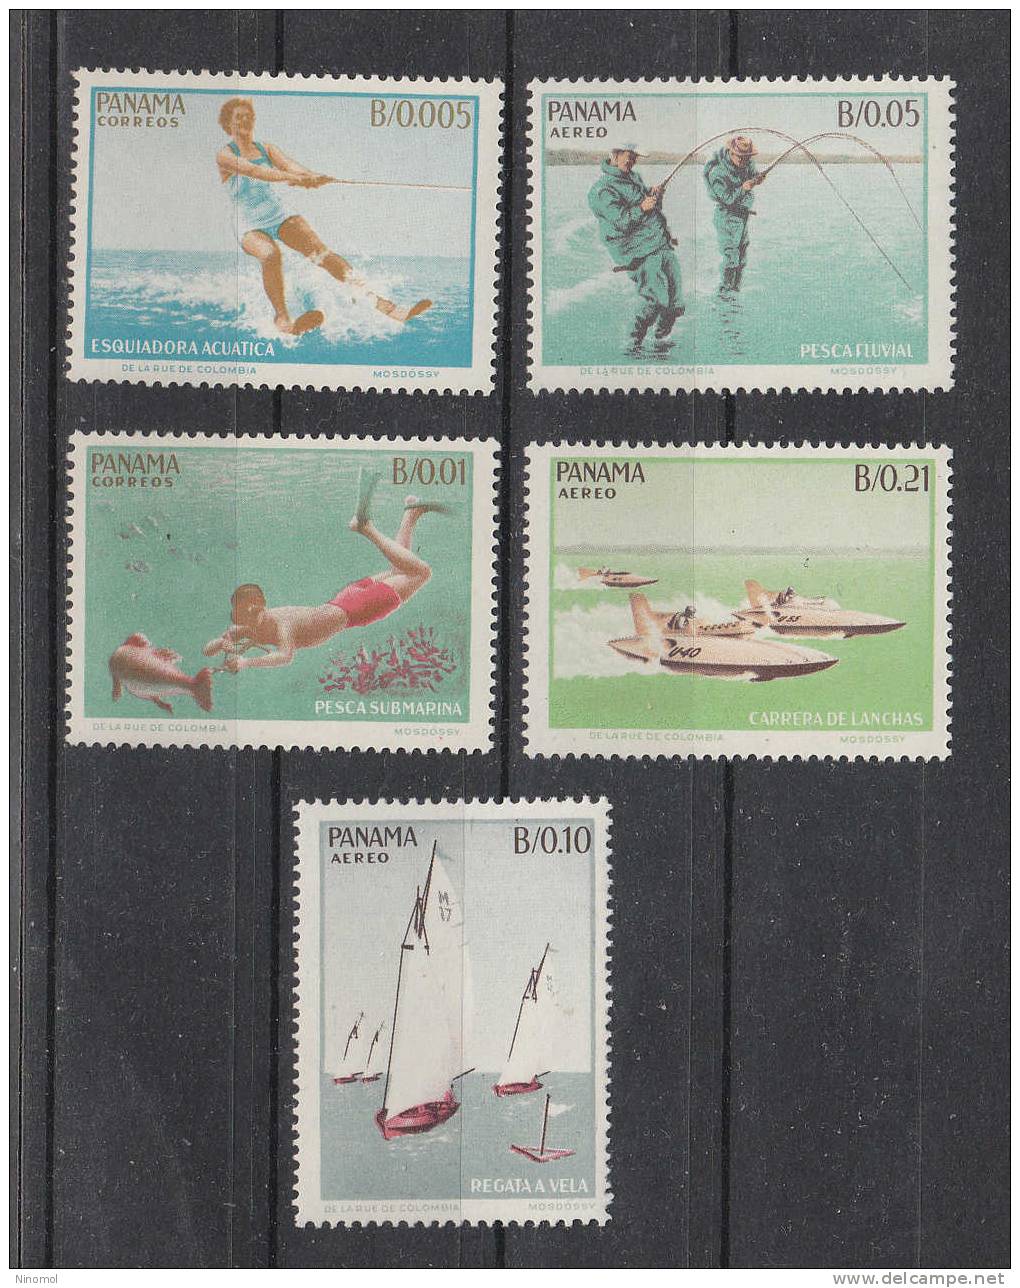 Panama   -   1964 .  Sci Nautico, Fishing, Sub, Sail, Motonautica.  Complete Set.  MNH,  Very Fresh - Water-skiing